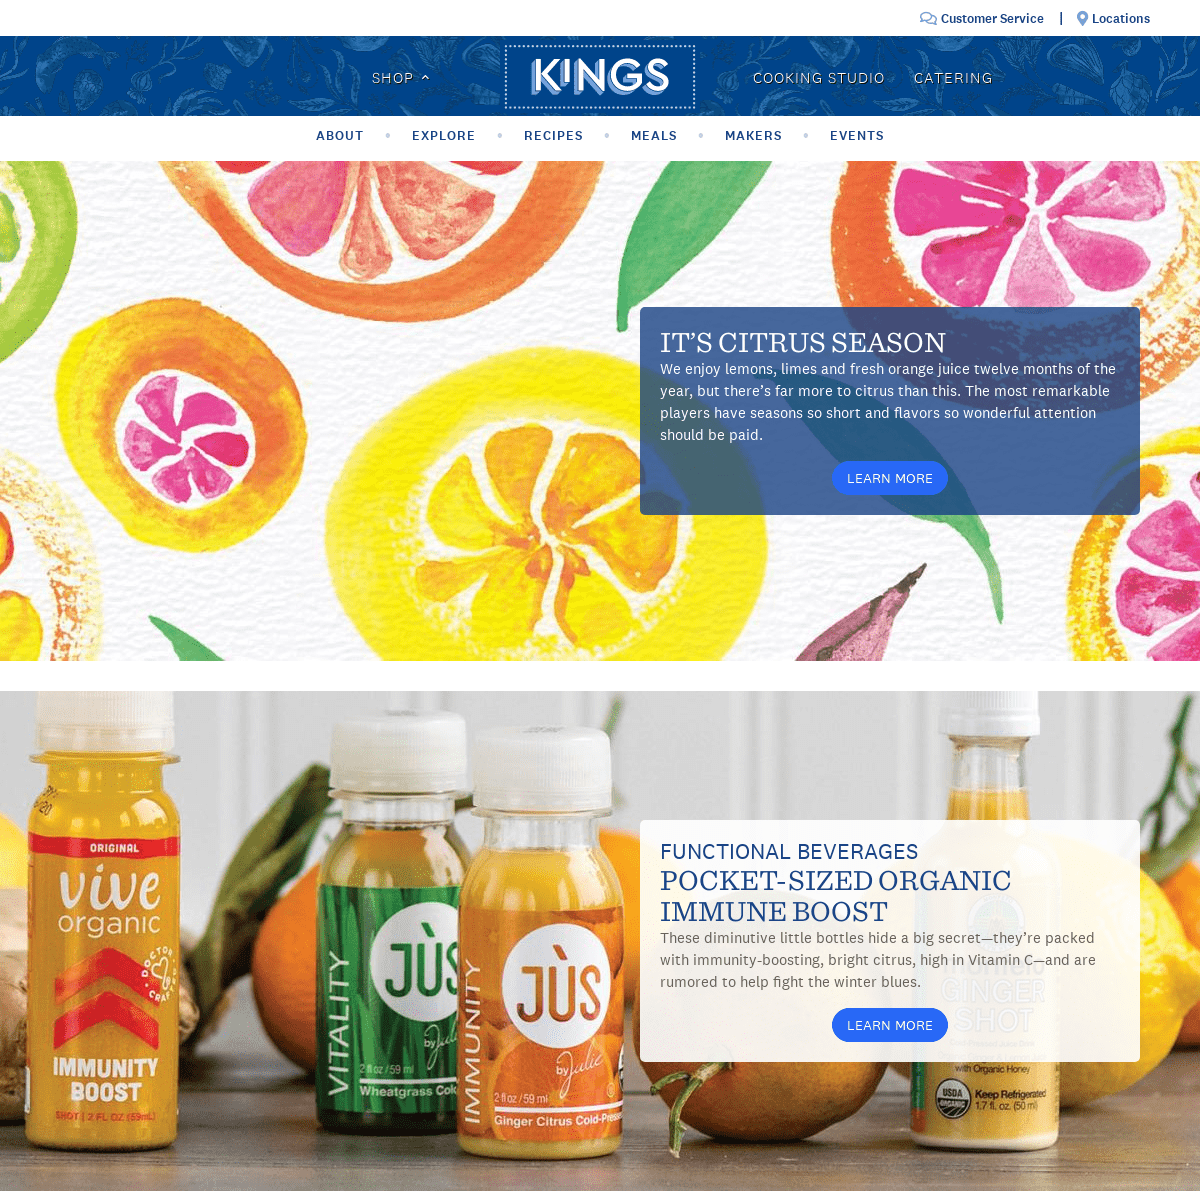 A complete backup of kingsfoodmarkets.com